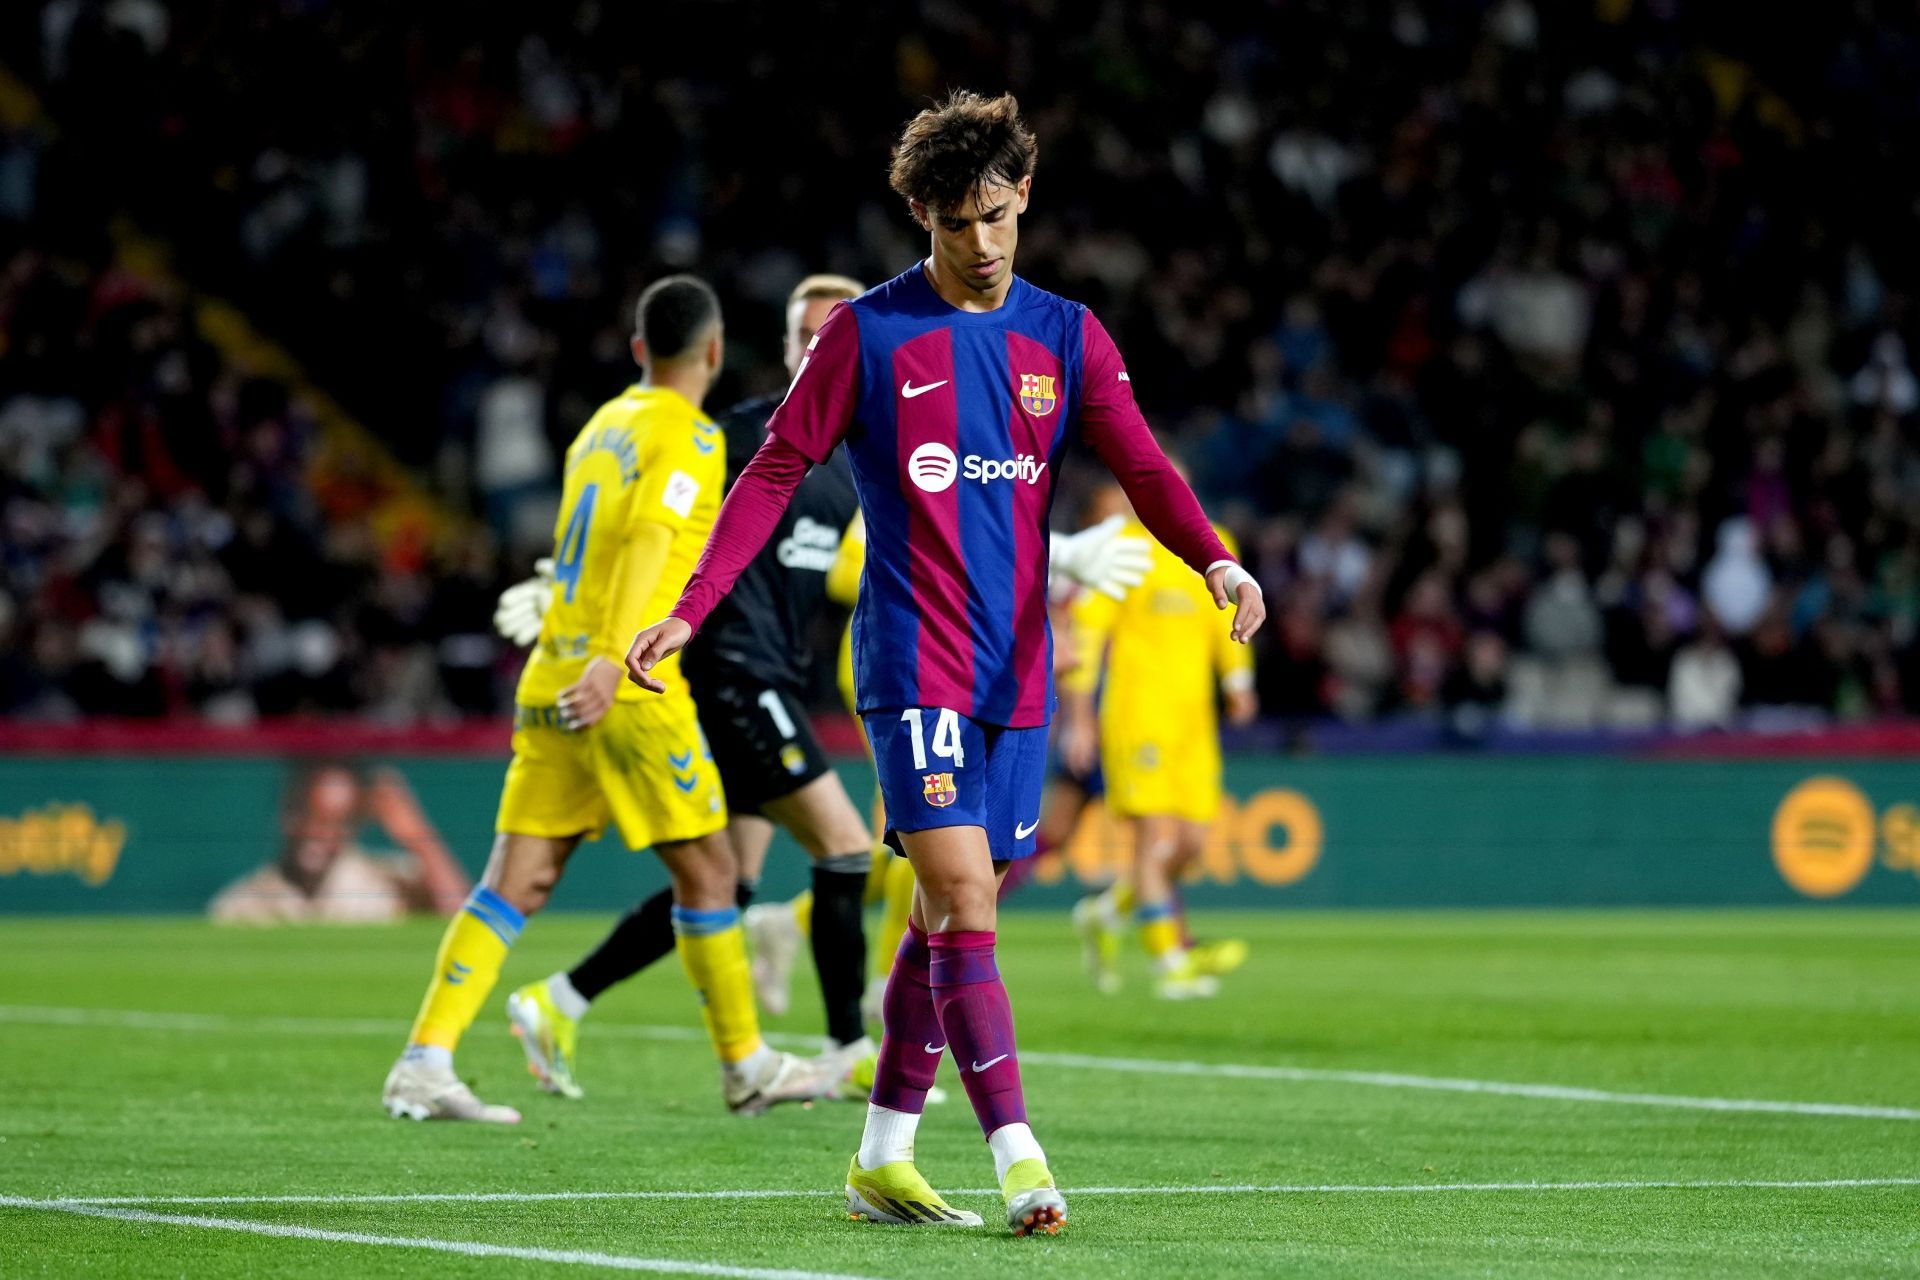 Joao Felix has been impressive at the Camp Nou this season.